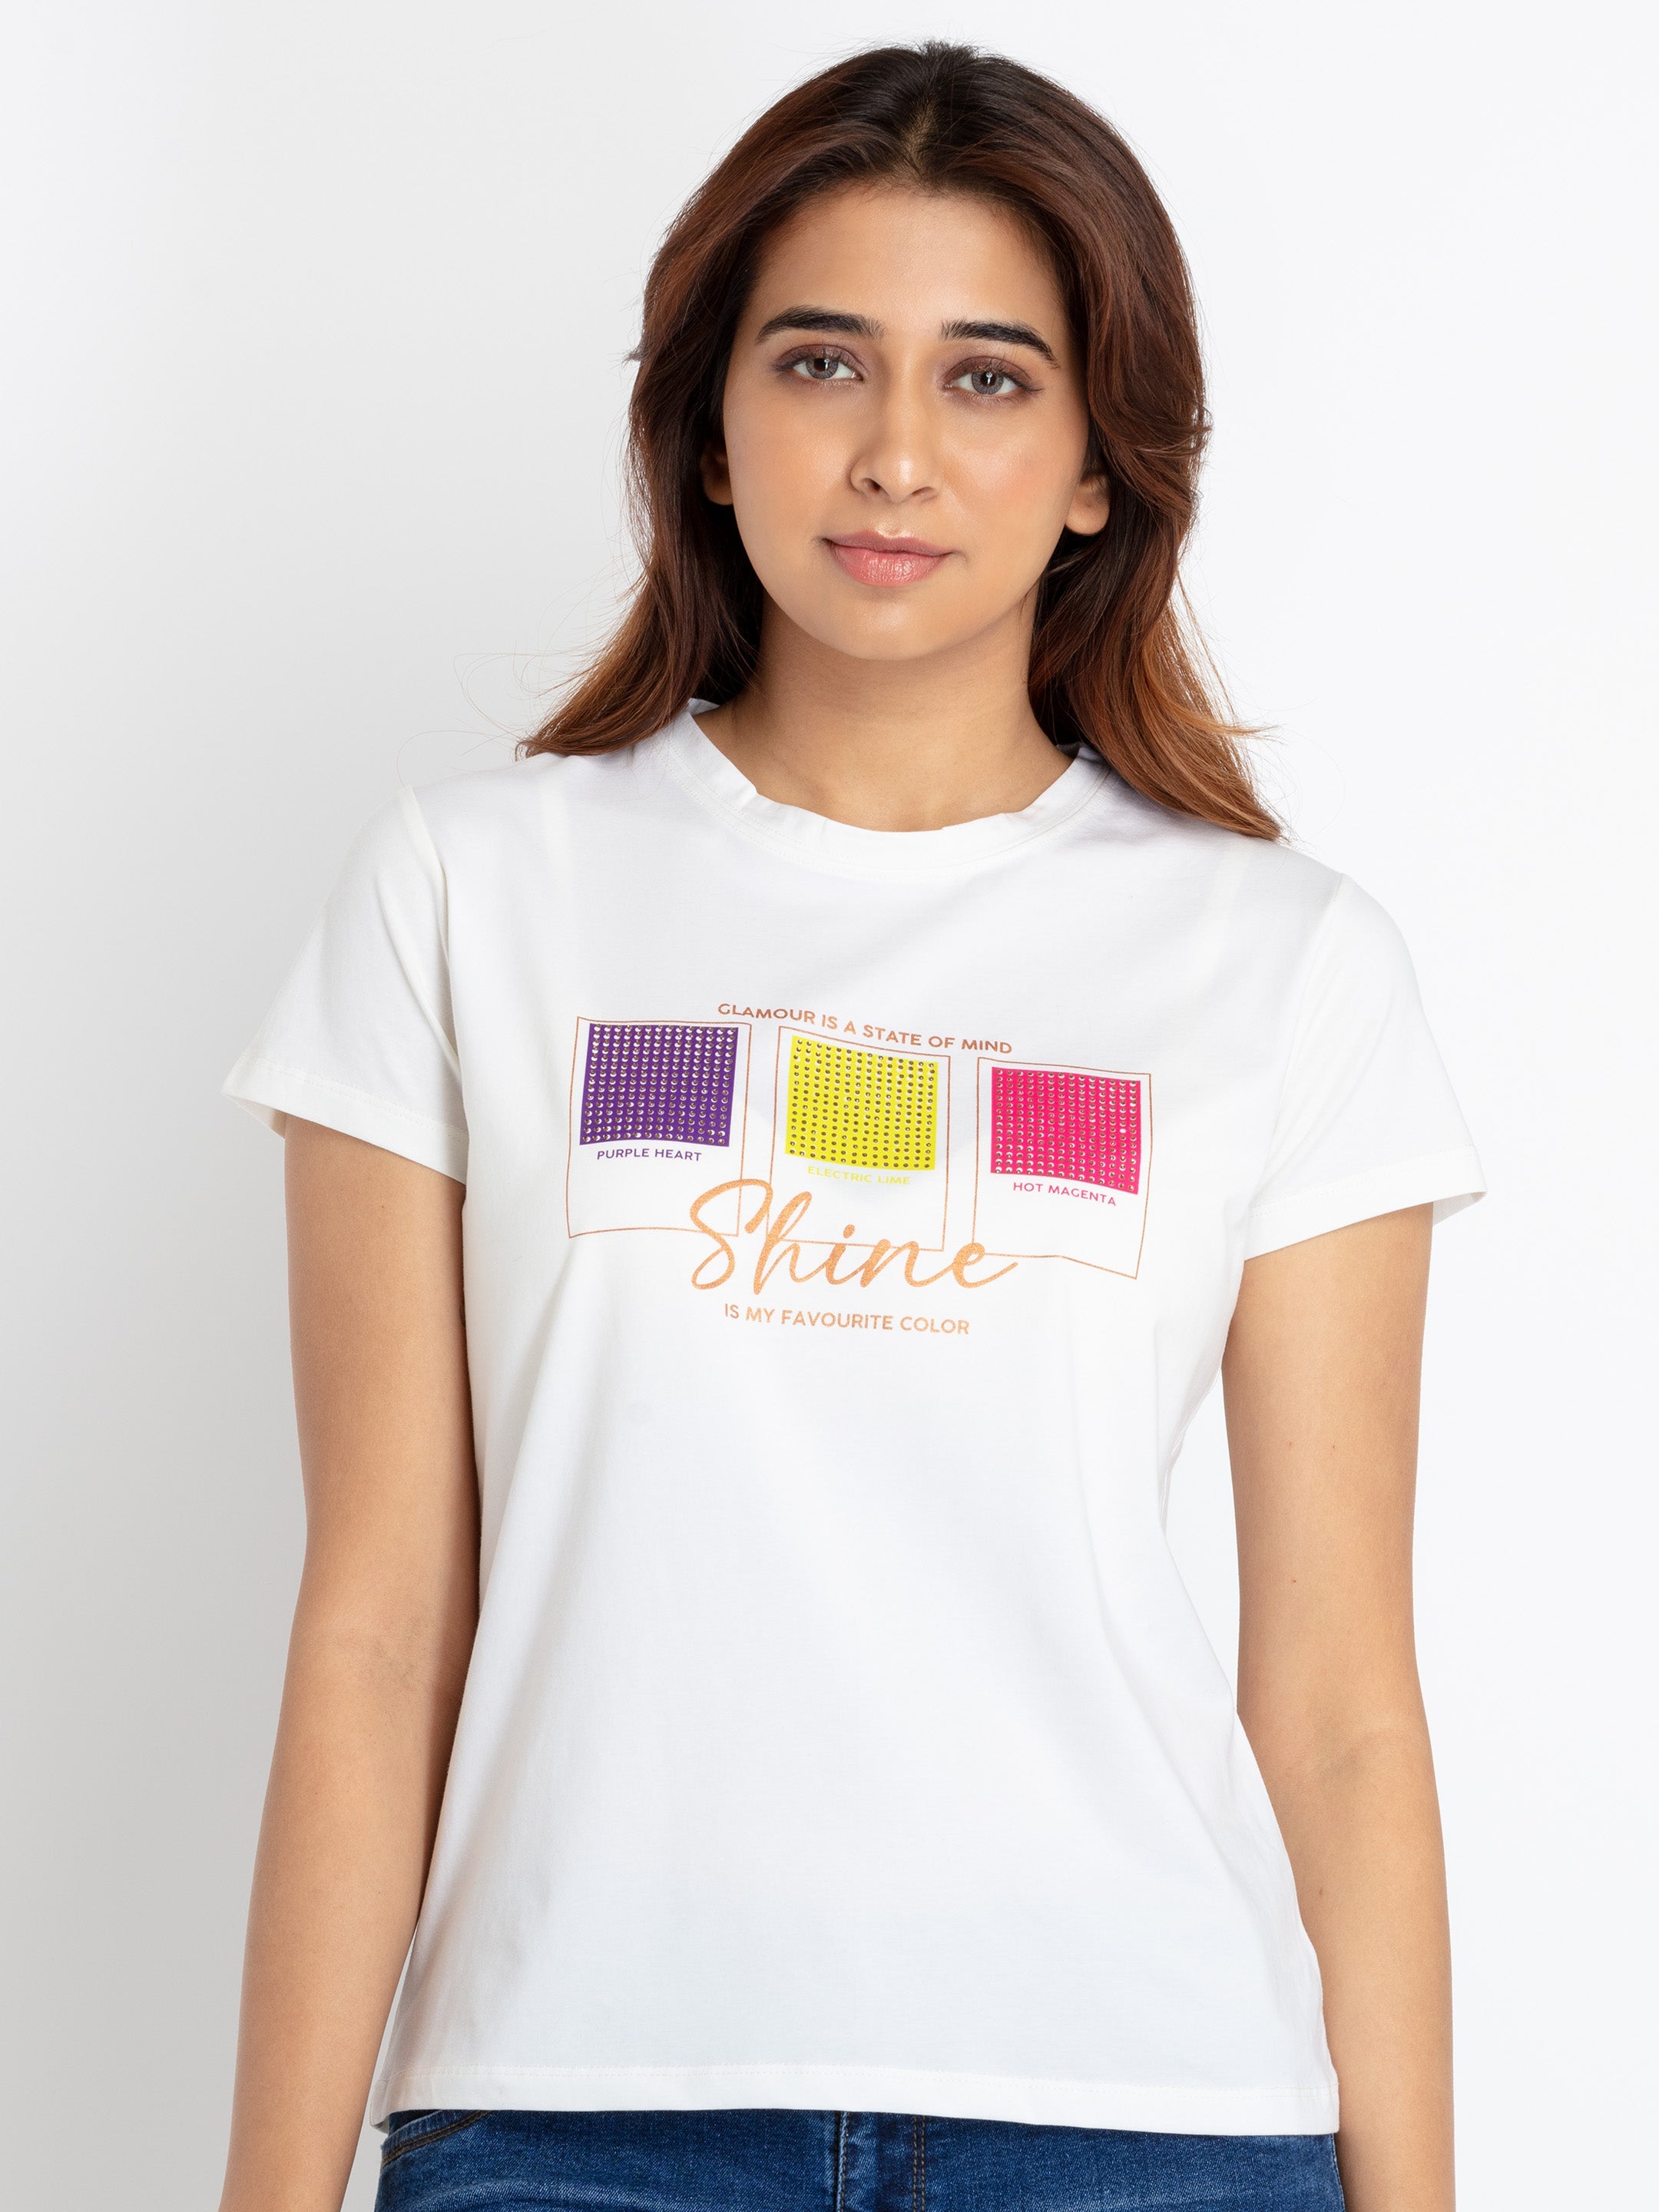 Status Quo |Womens Printed T-Shirt - S, M,  L,  XL,  XXL, 3XL, 4XL, 5XL